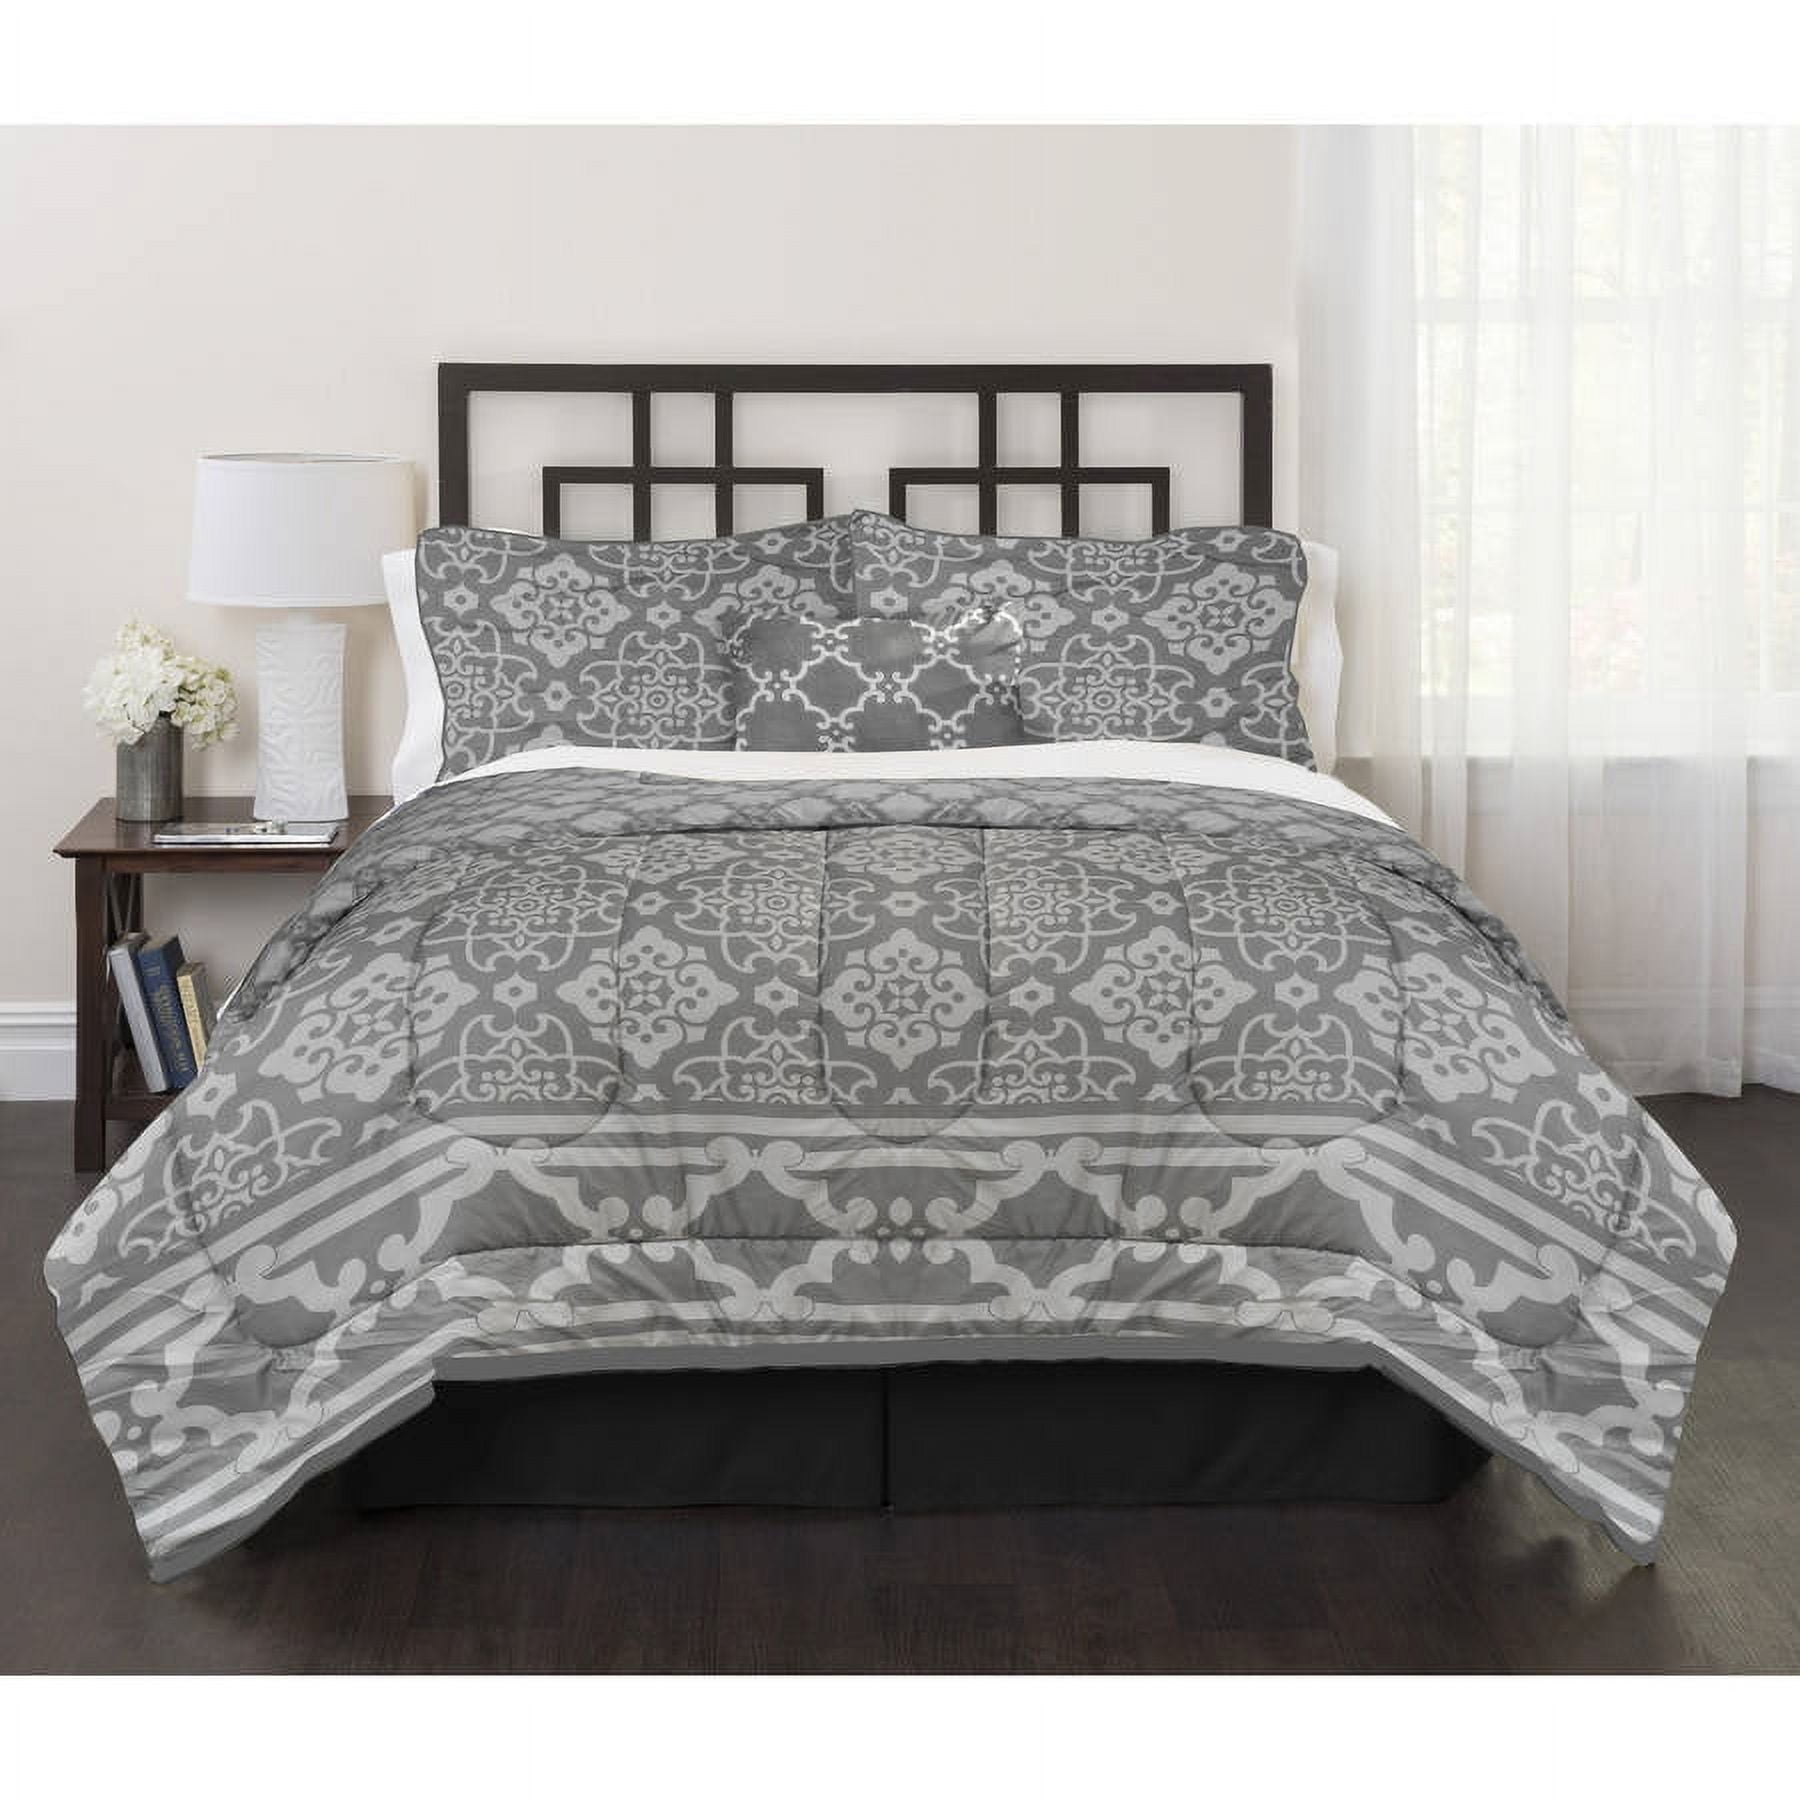 Stellar Grey 4-Piece Bedding Comforter Set - Walmart.com